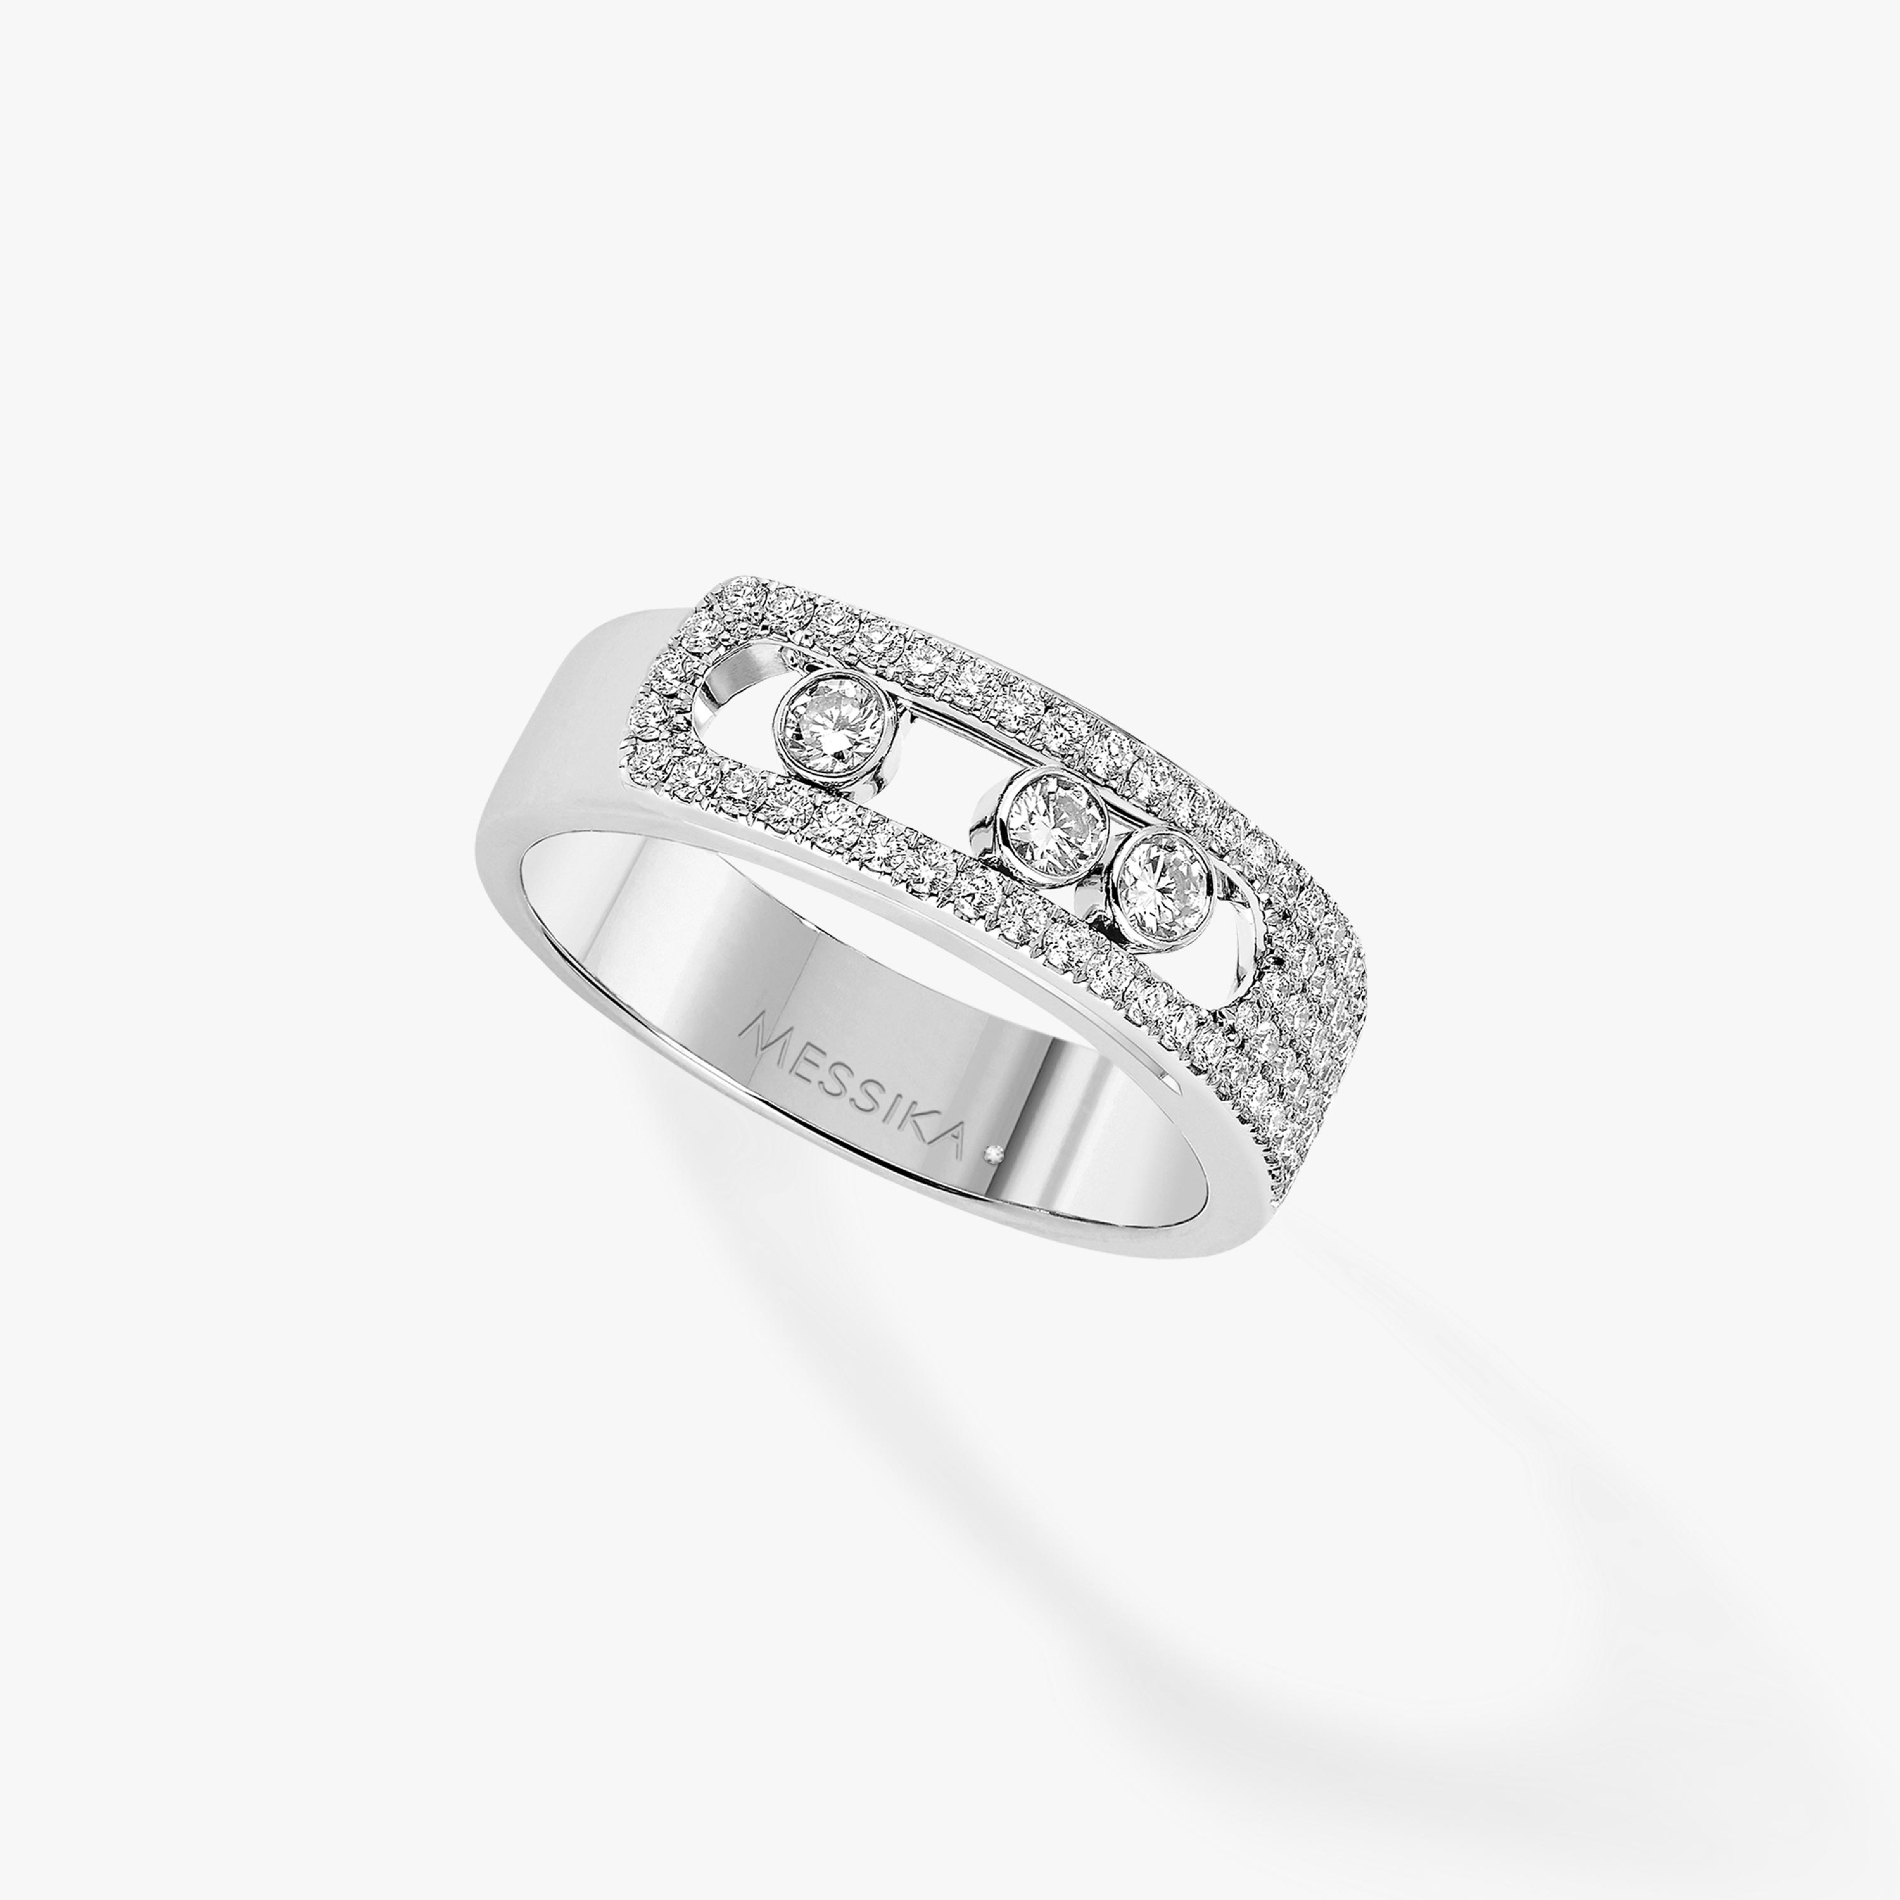 Move Noa Pavé White Gold For Her Diamond Ring 06129-WG